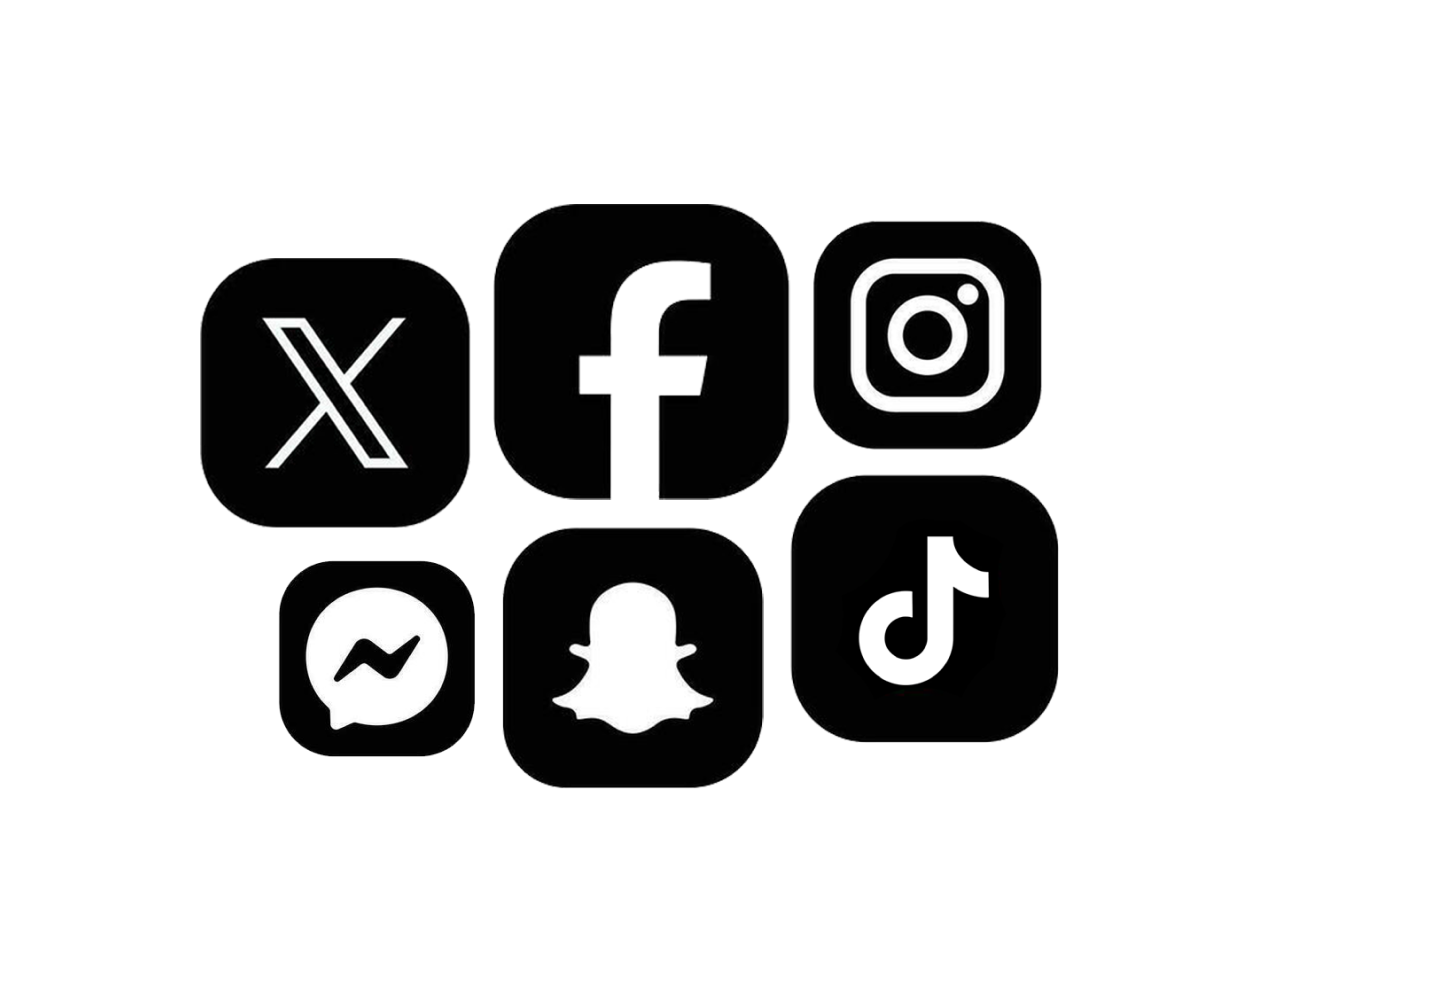 A group of social media logos